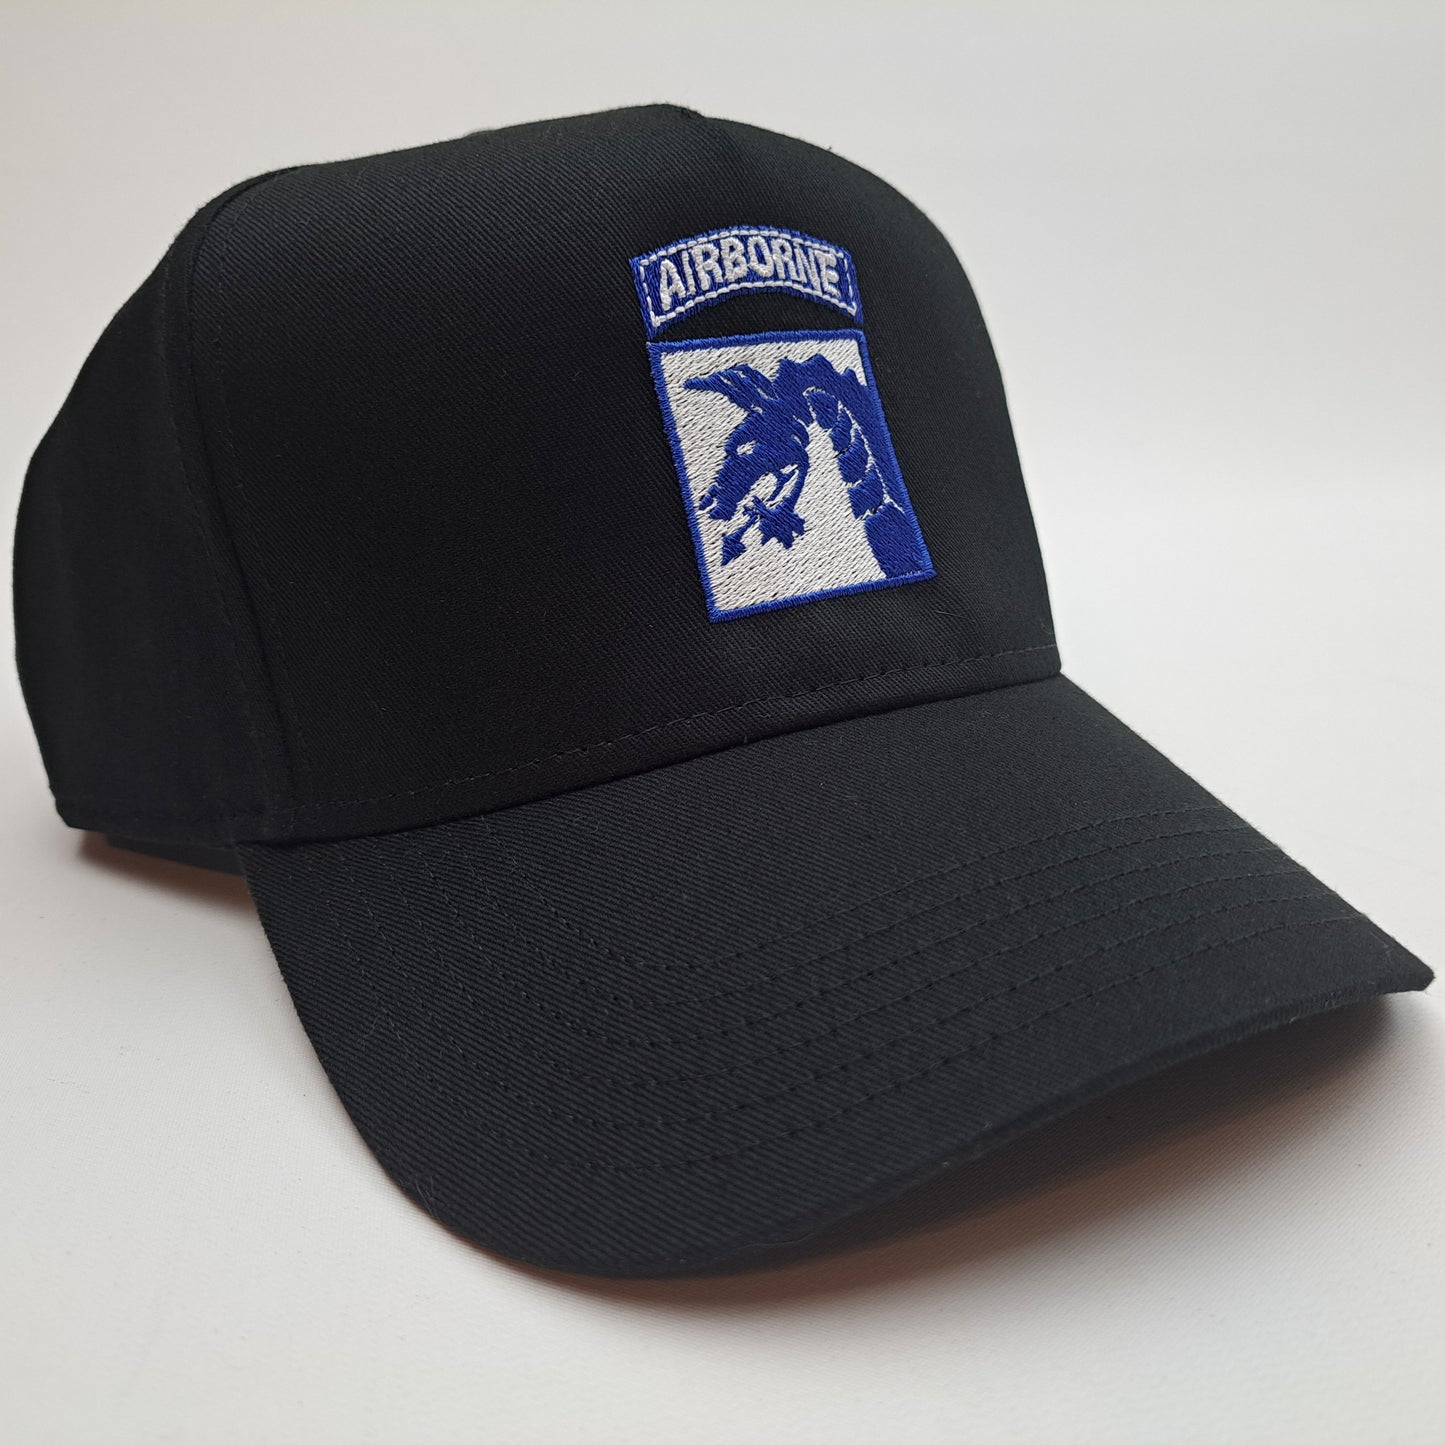 U.S. Army 18th Airborne Men's Ball Cap Hat Black